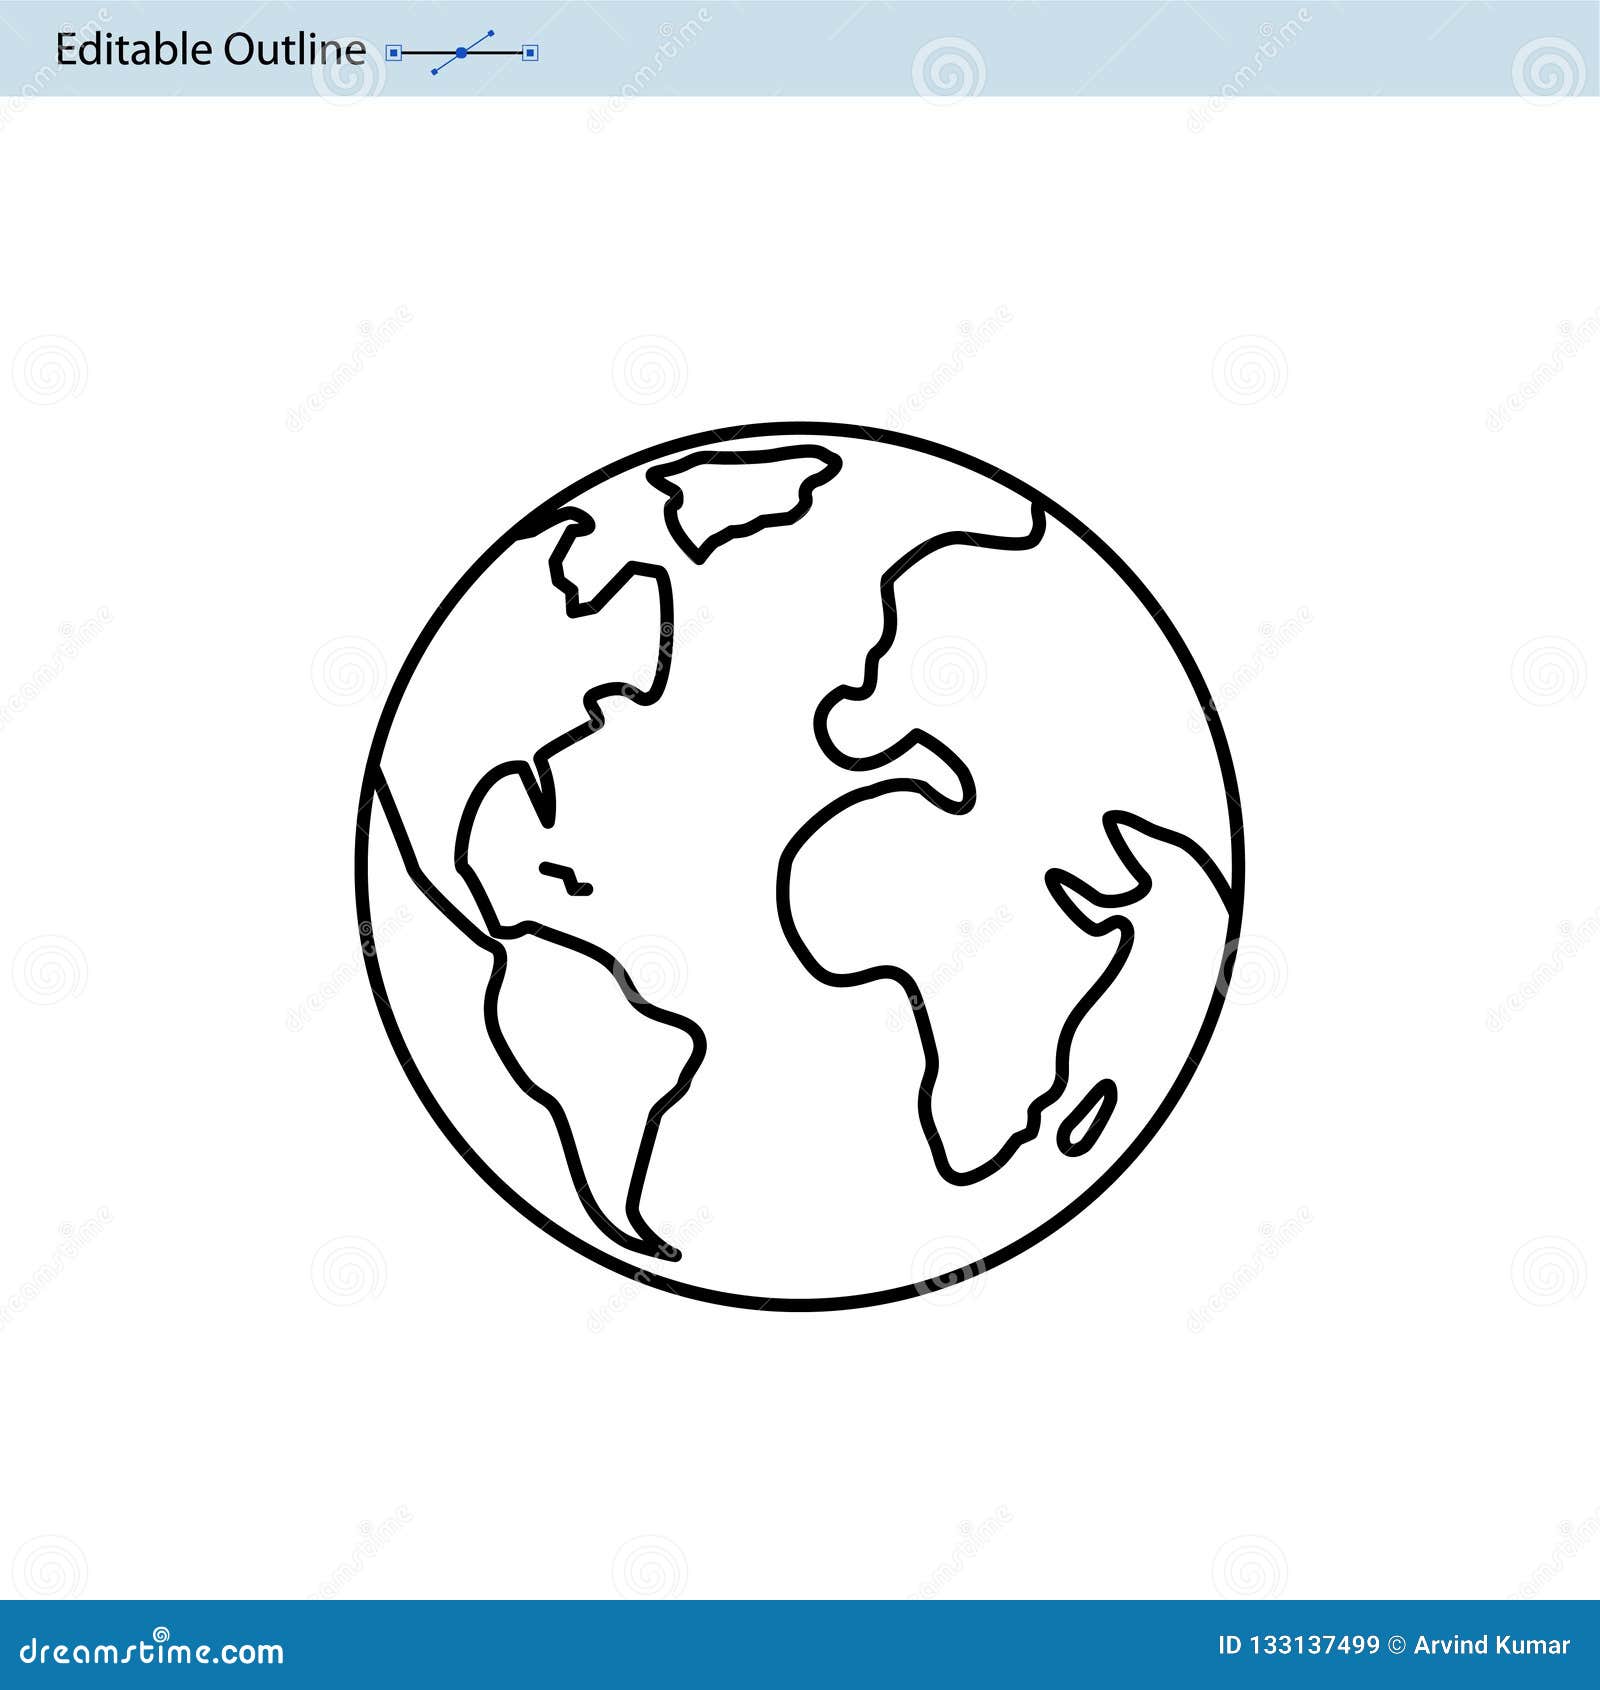 earth icon, world icon, globe icon, planet